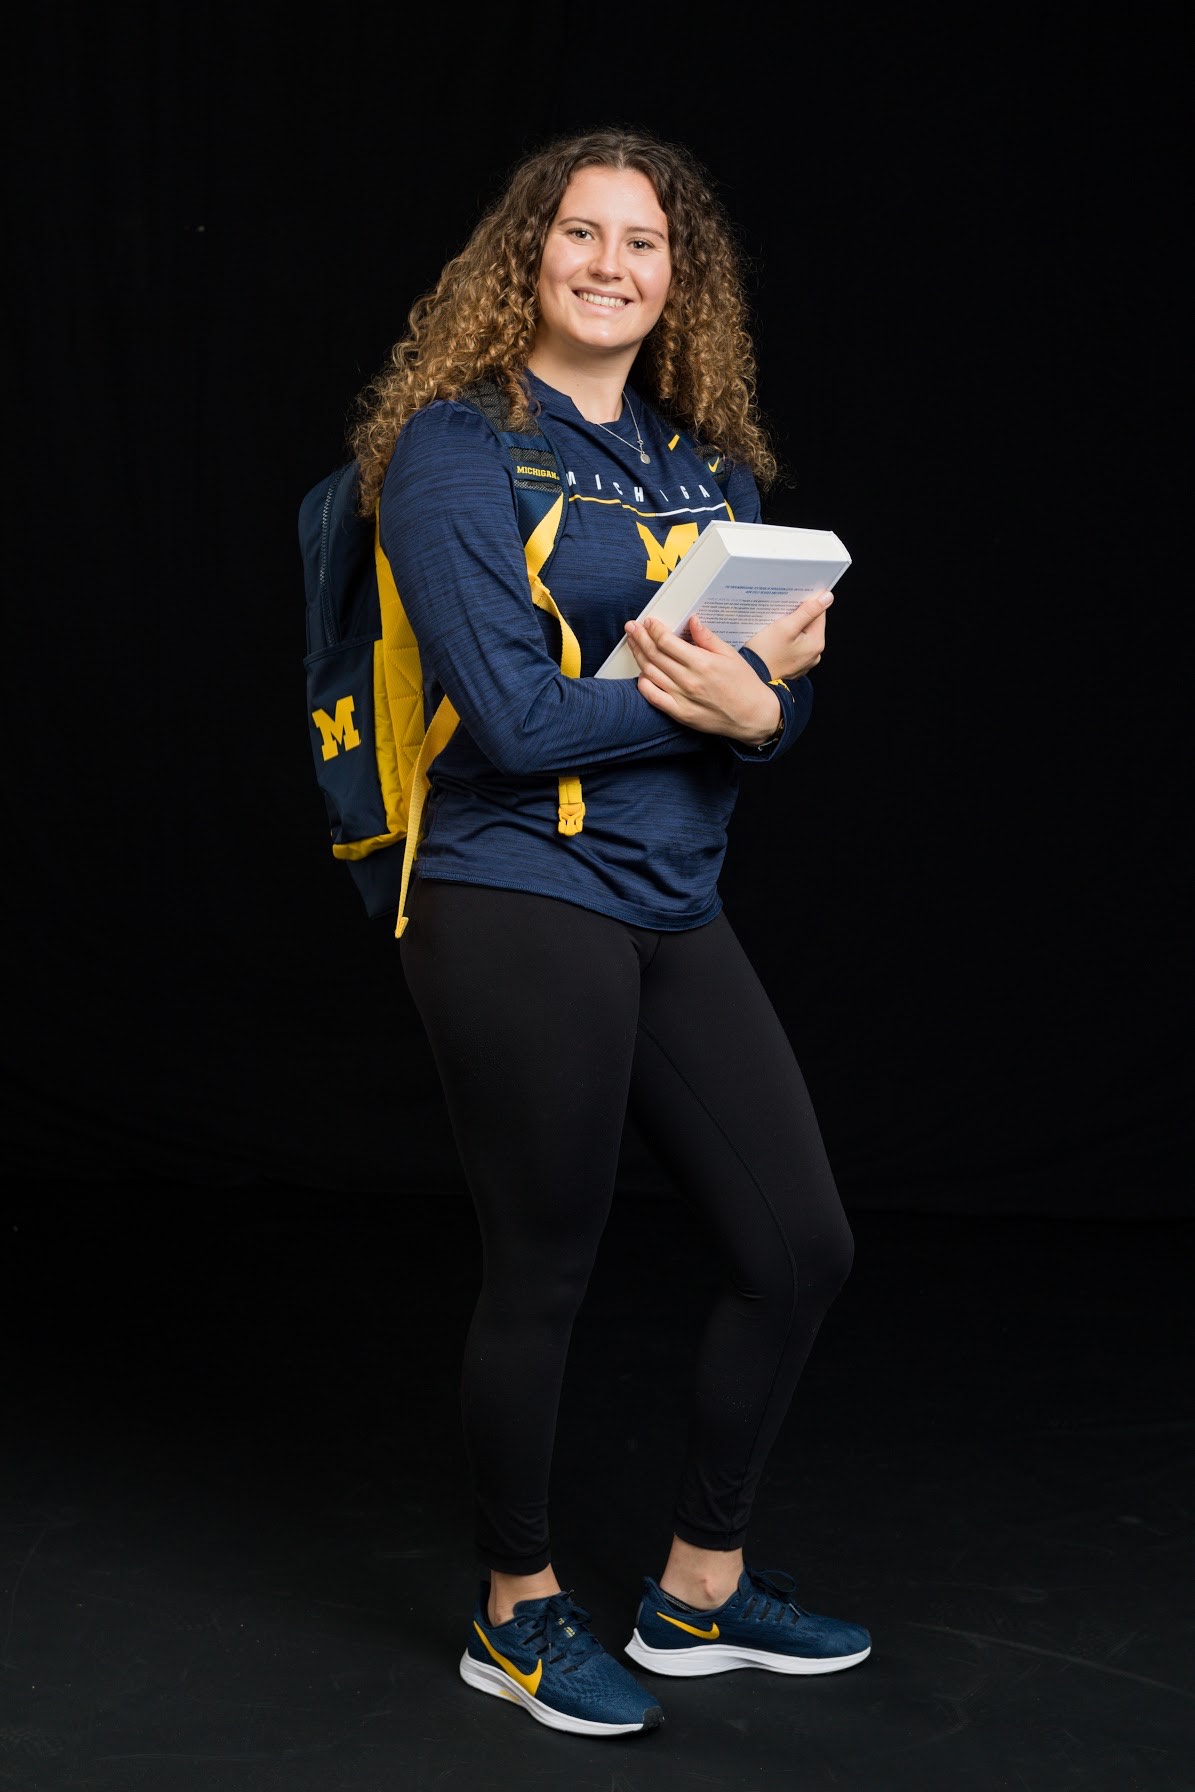 Kathy's student athlete portrait